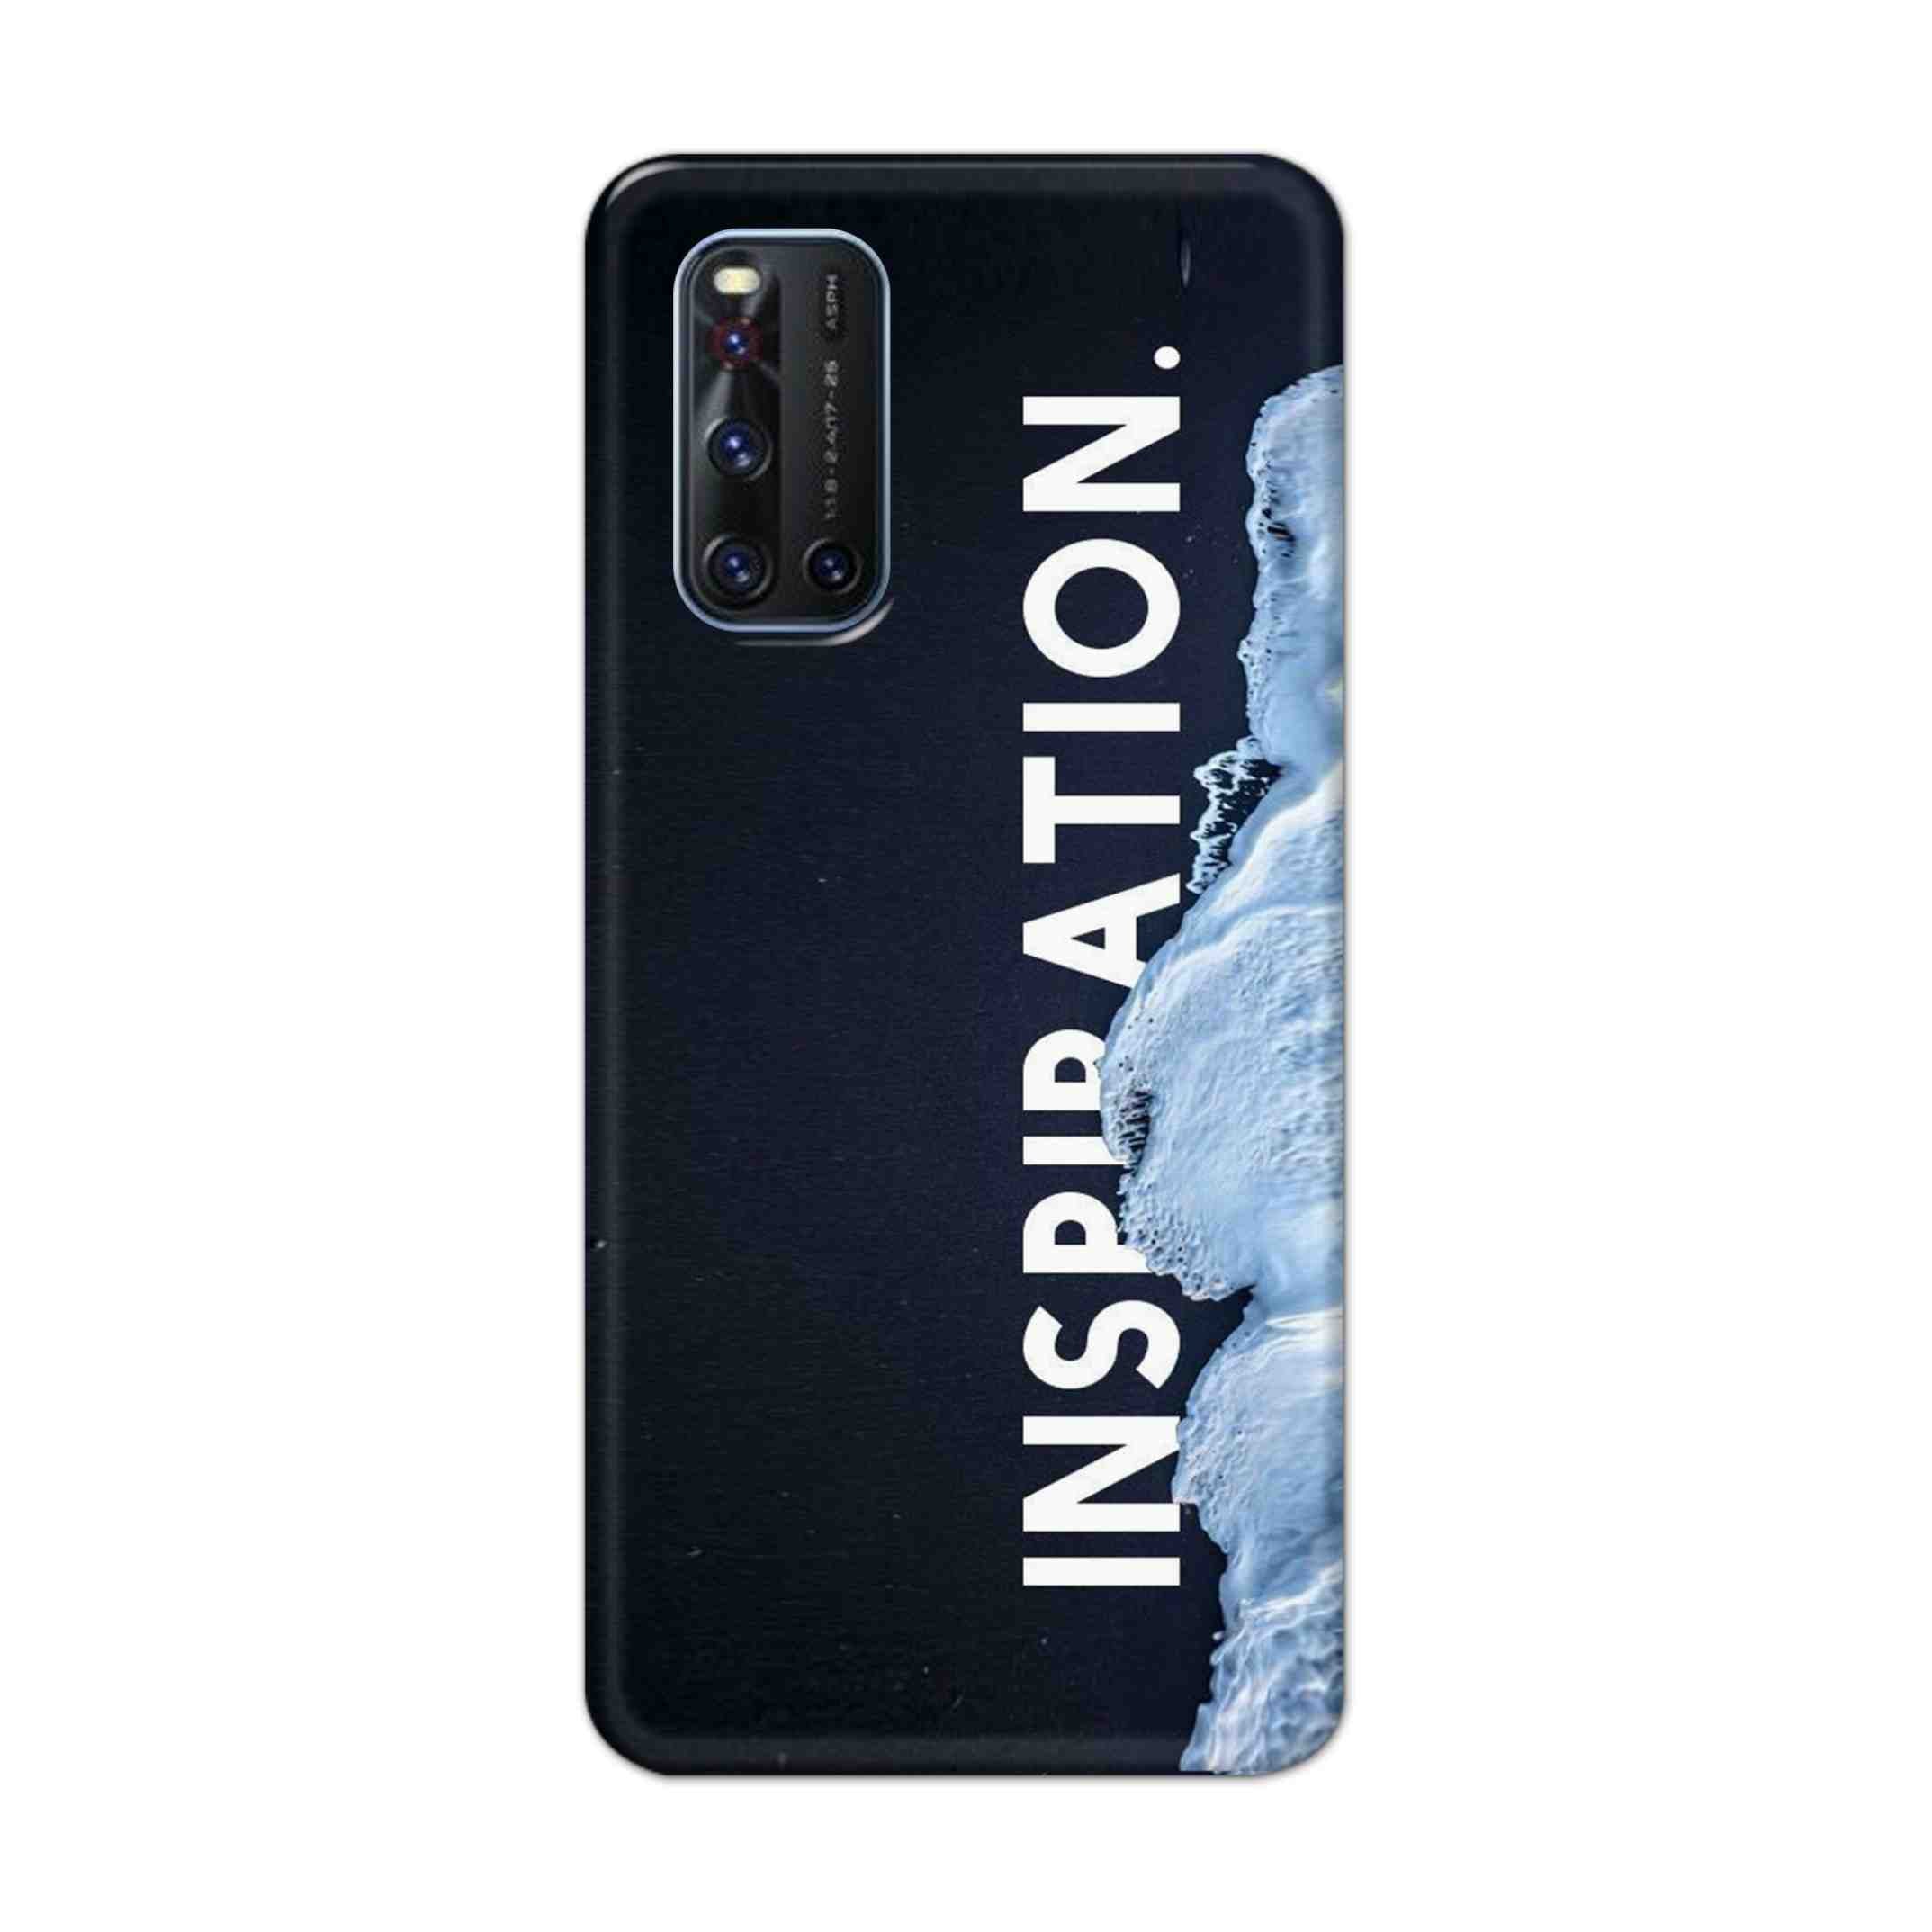 Buy Inspiration Hard Back Mobile Phone Case Cover For VivoV19 Online